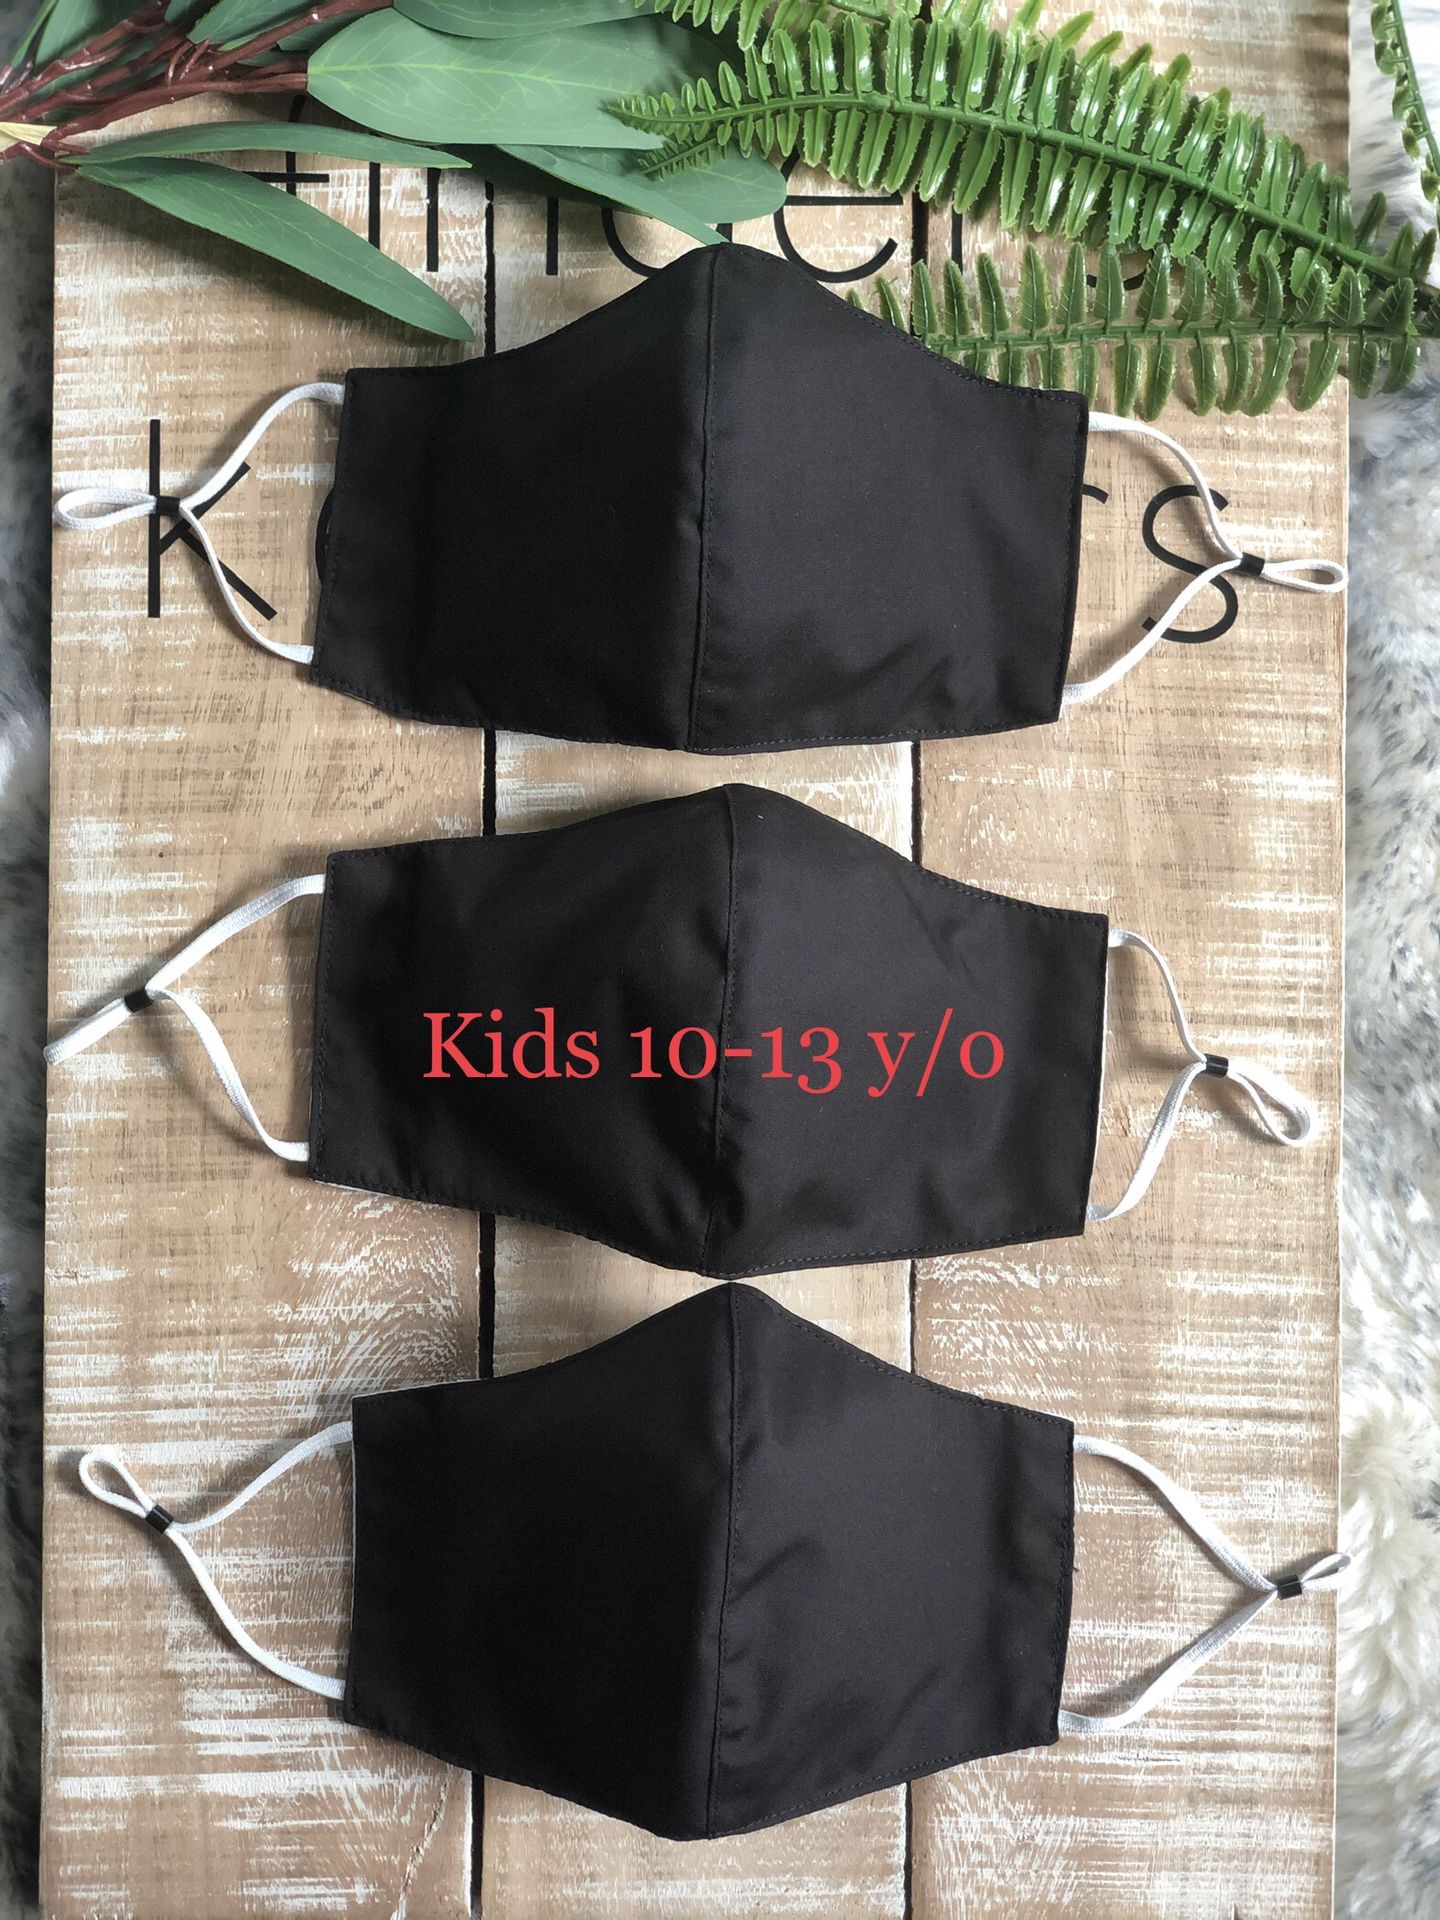 Kids face cover bundle 10-13 y/o